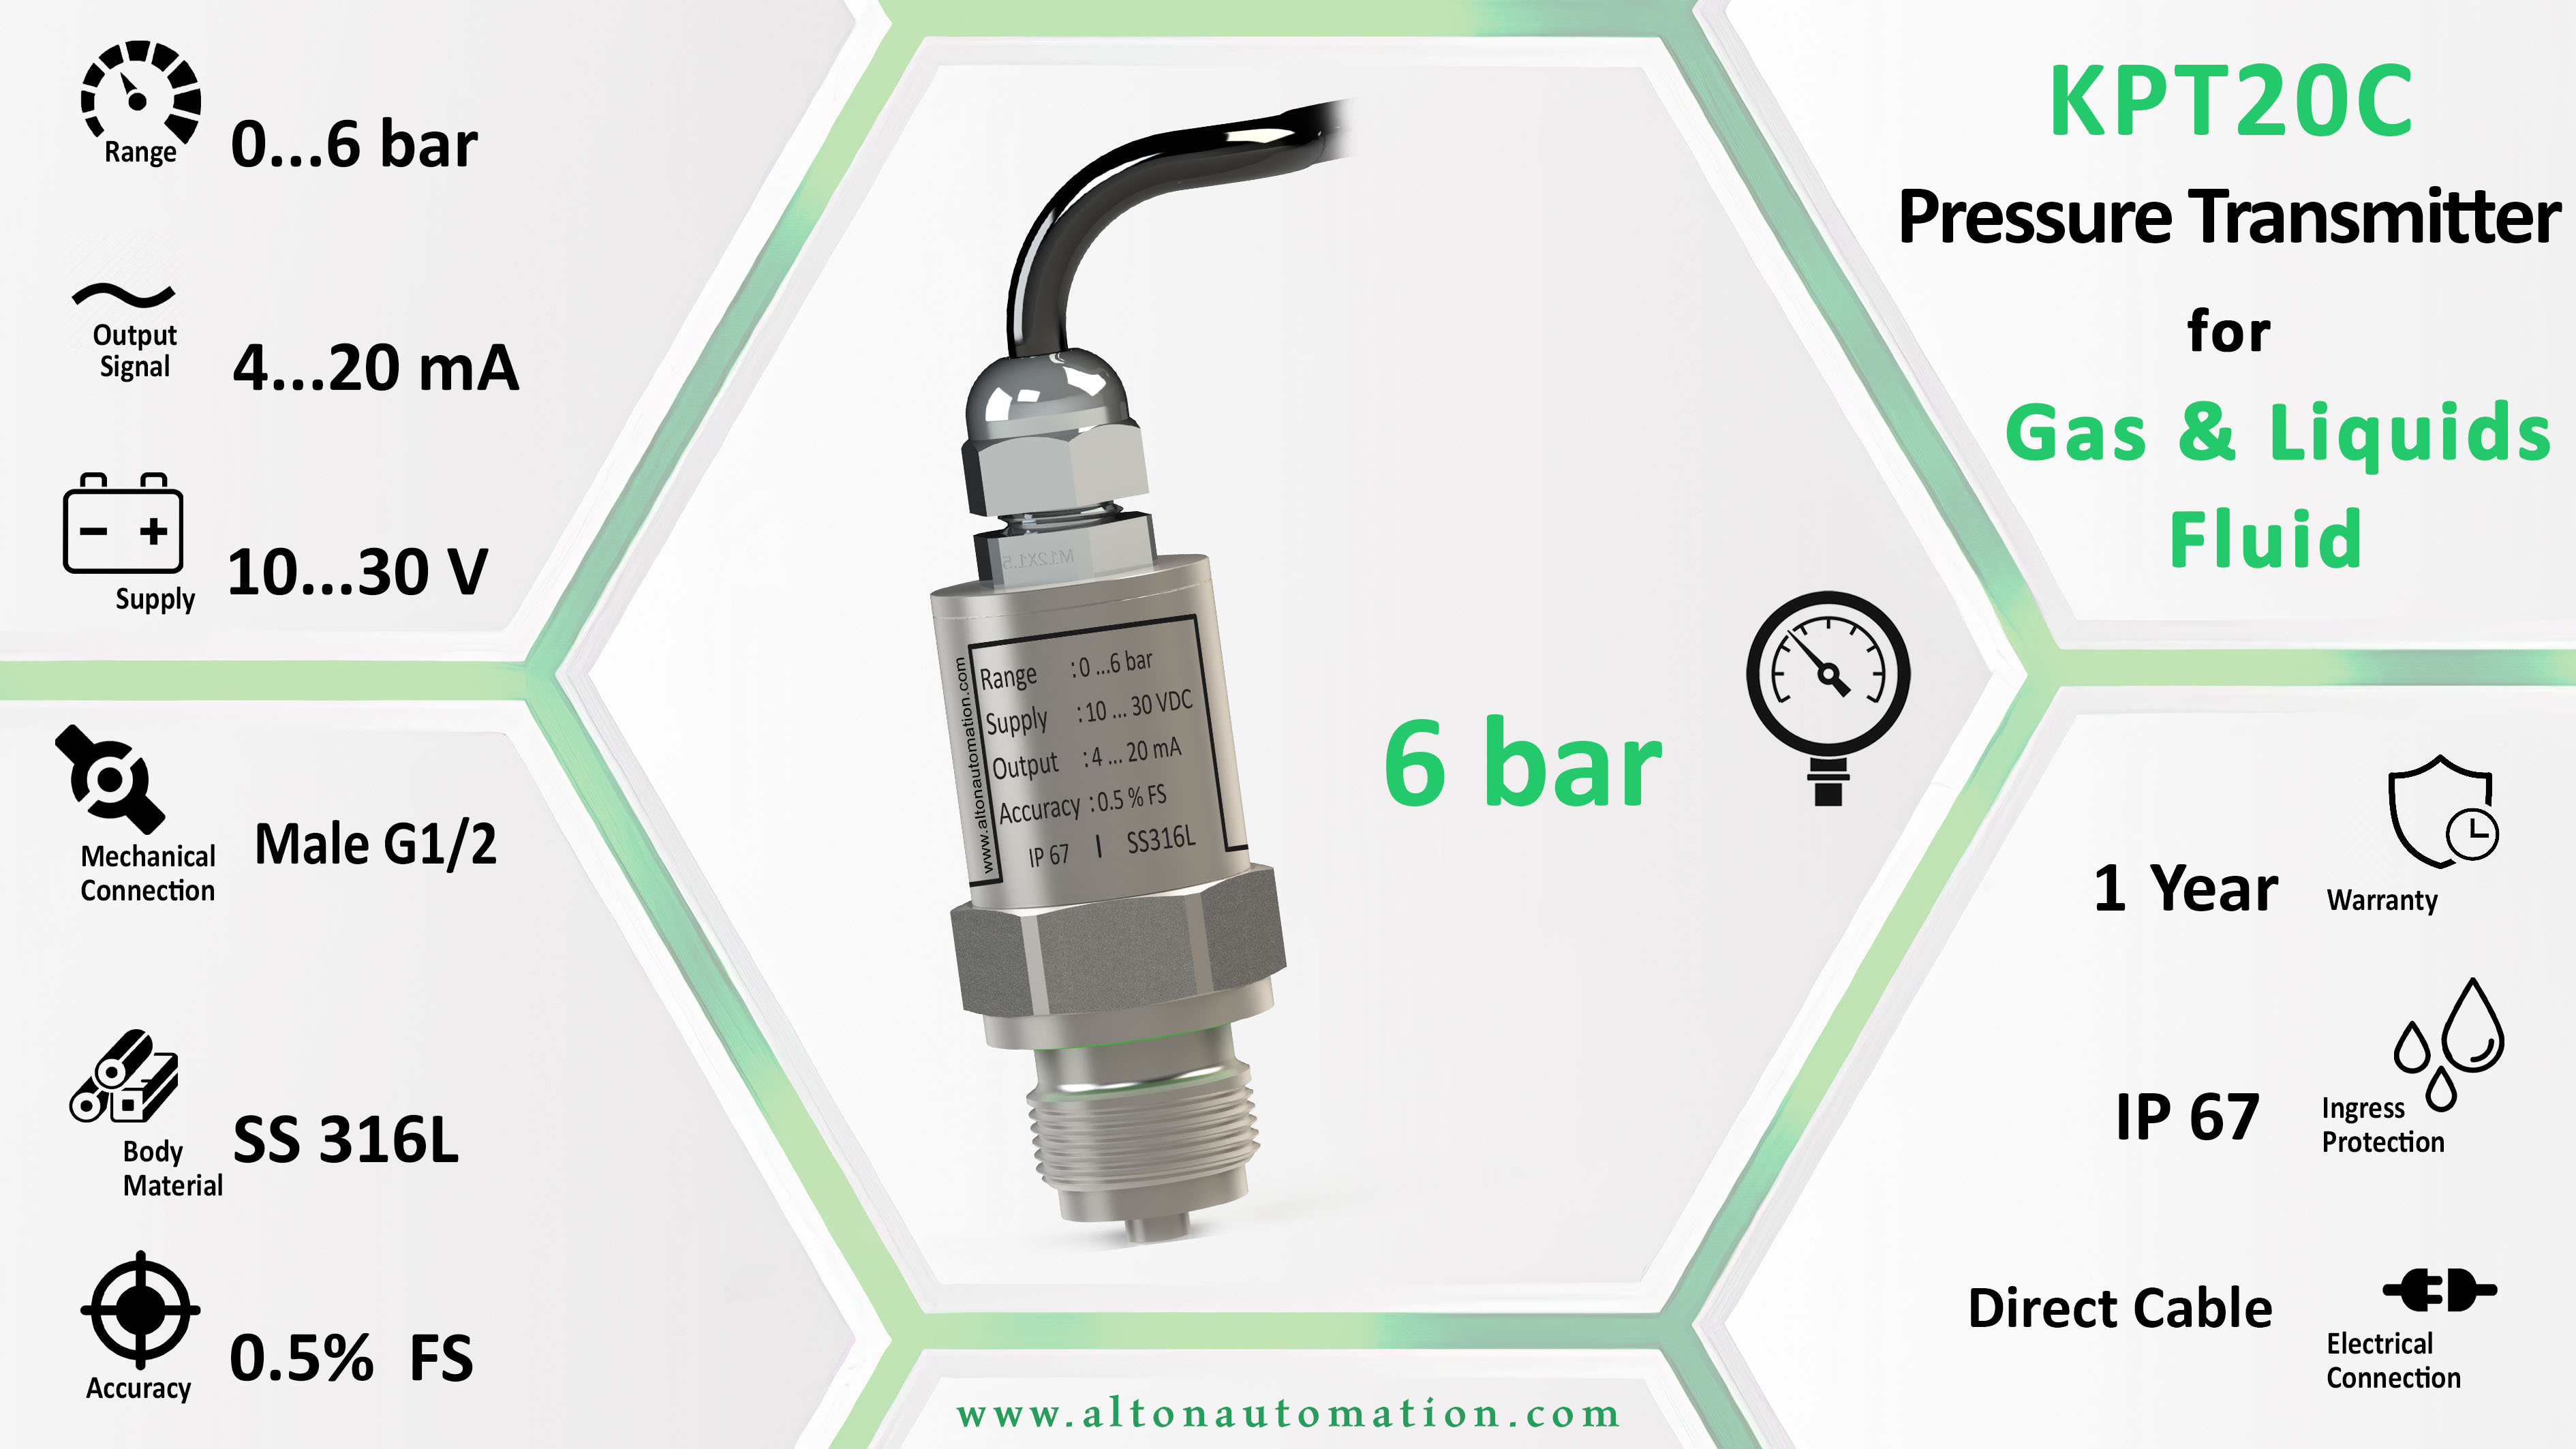 Pressure Transmitter for Gas & Liquids Fluid_KPT20C-006-C1-MG2_image_2